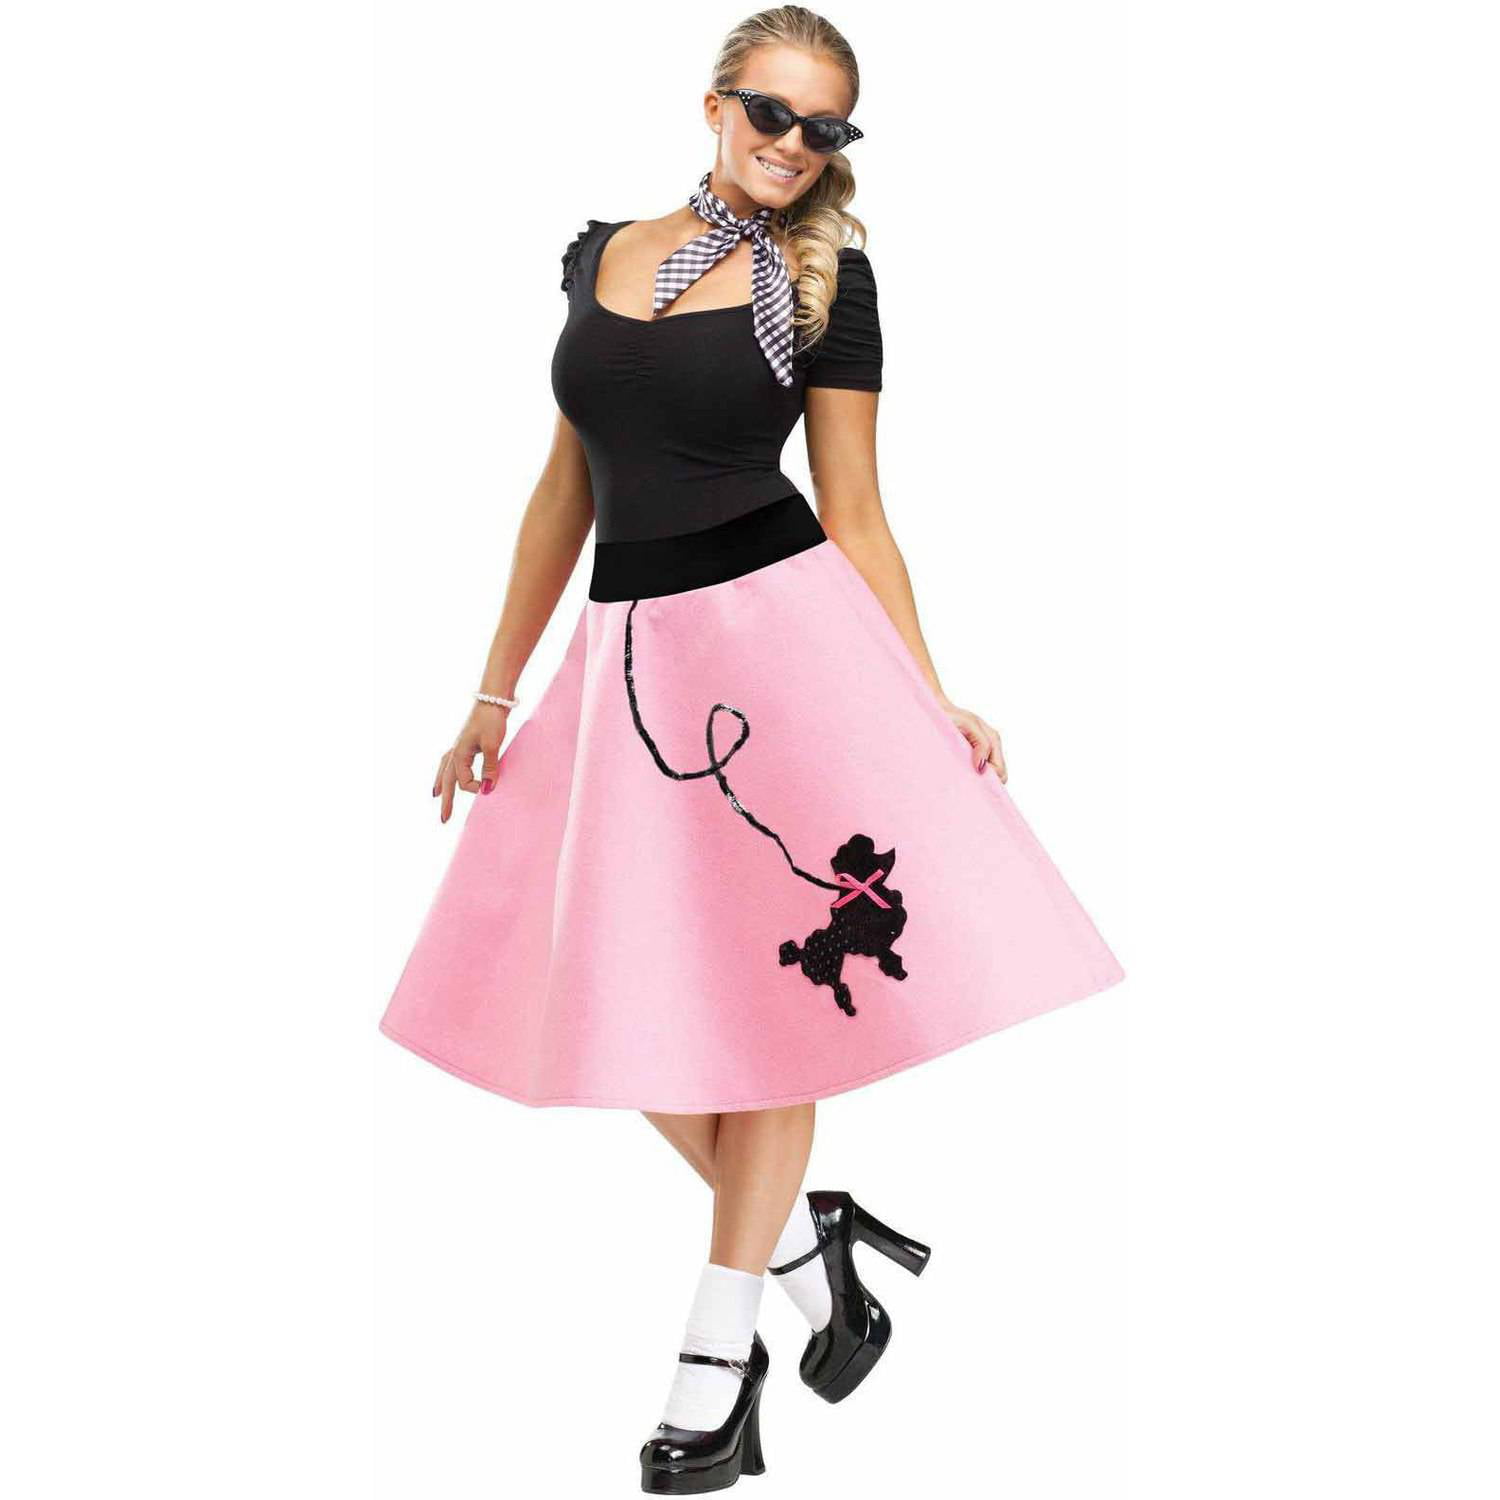 Adult Poodle Skirt Women's Adult Halloween Costume - Walmart.com